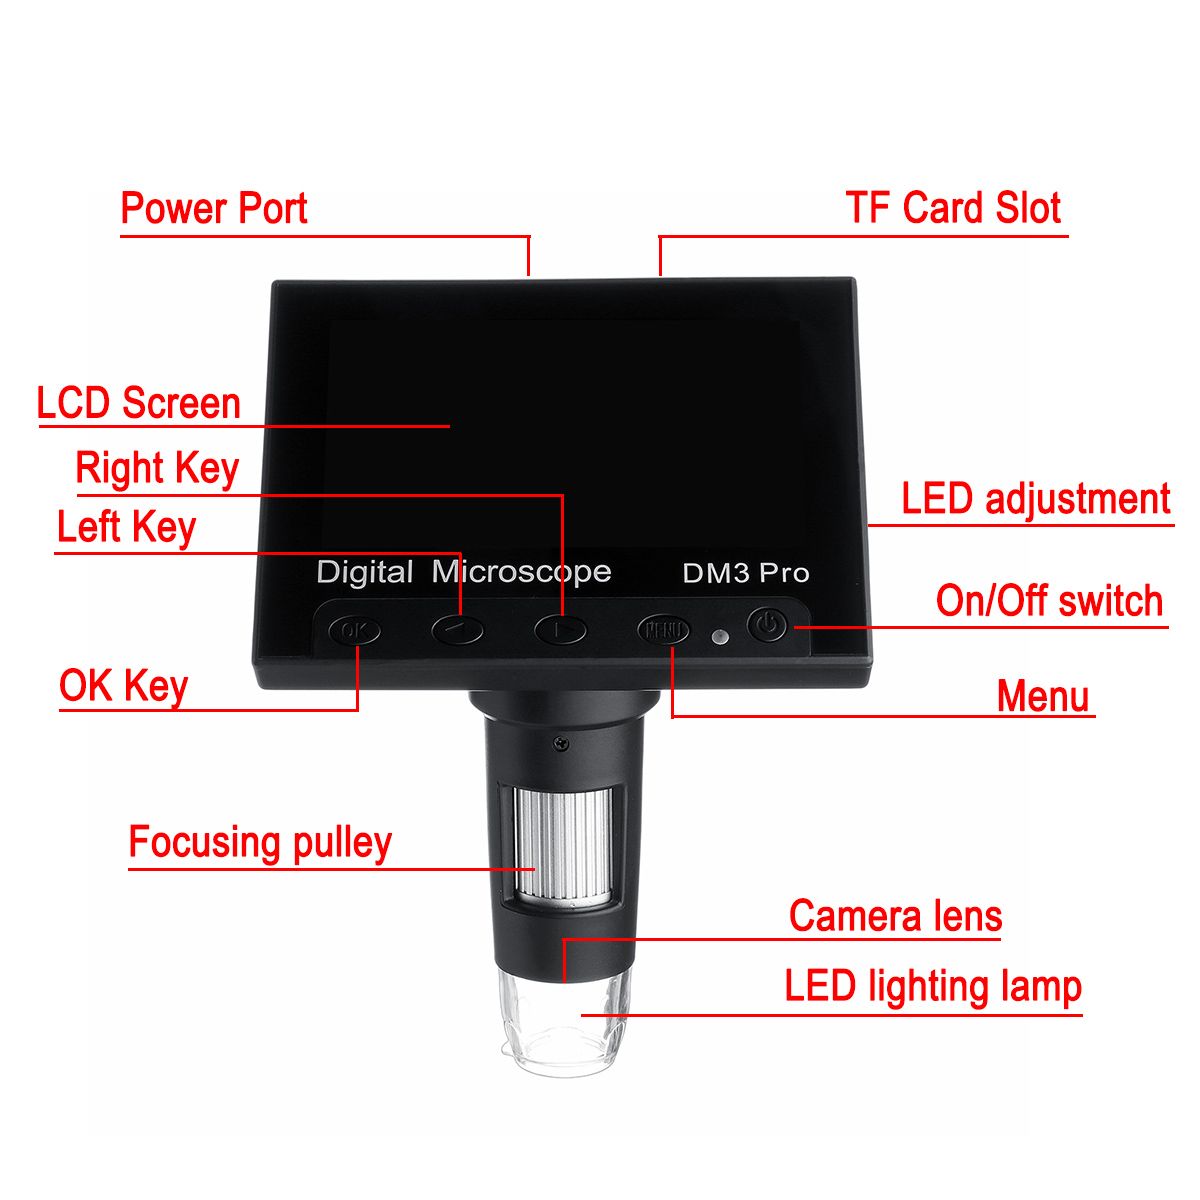 DM3-Pro-1000X-43-inch-1080P-Remote-Control-Portable-Digital-Microscope-Magnifier-Camera-With-8LED-Li-1600594